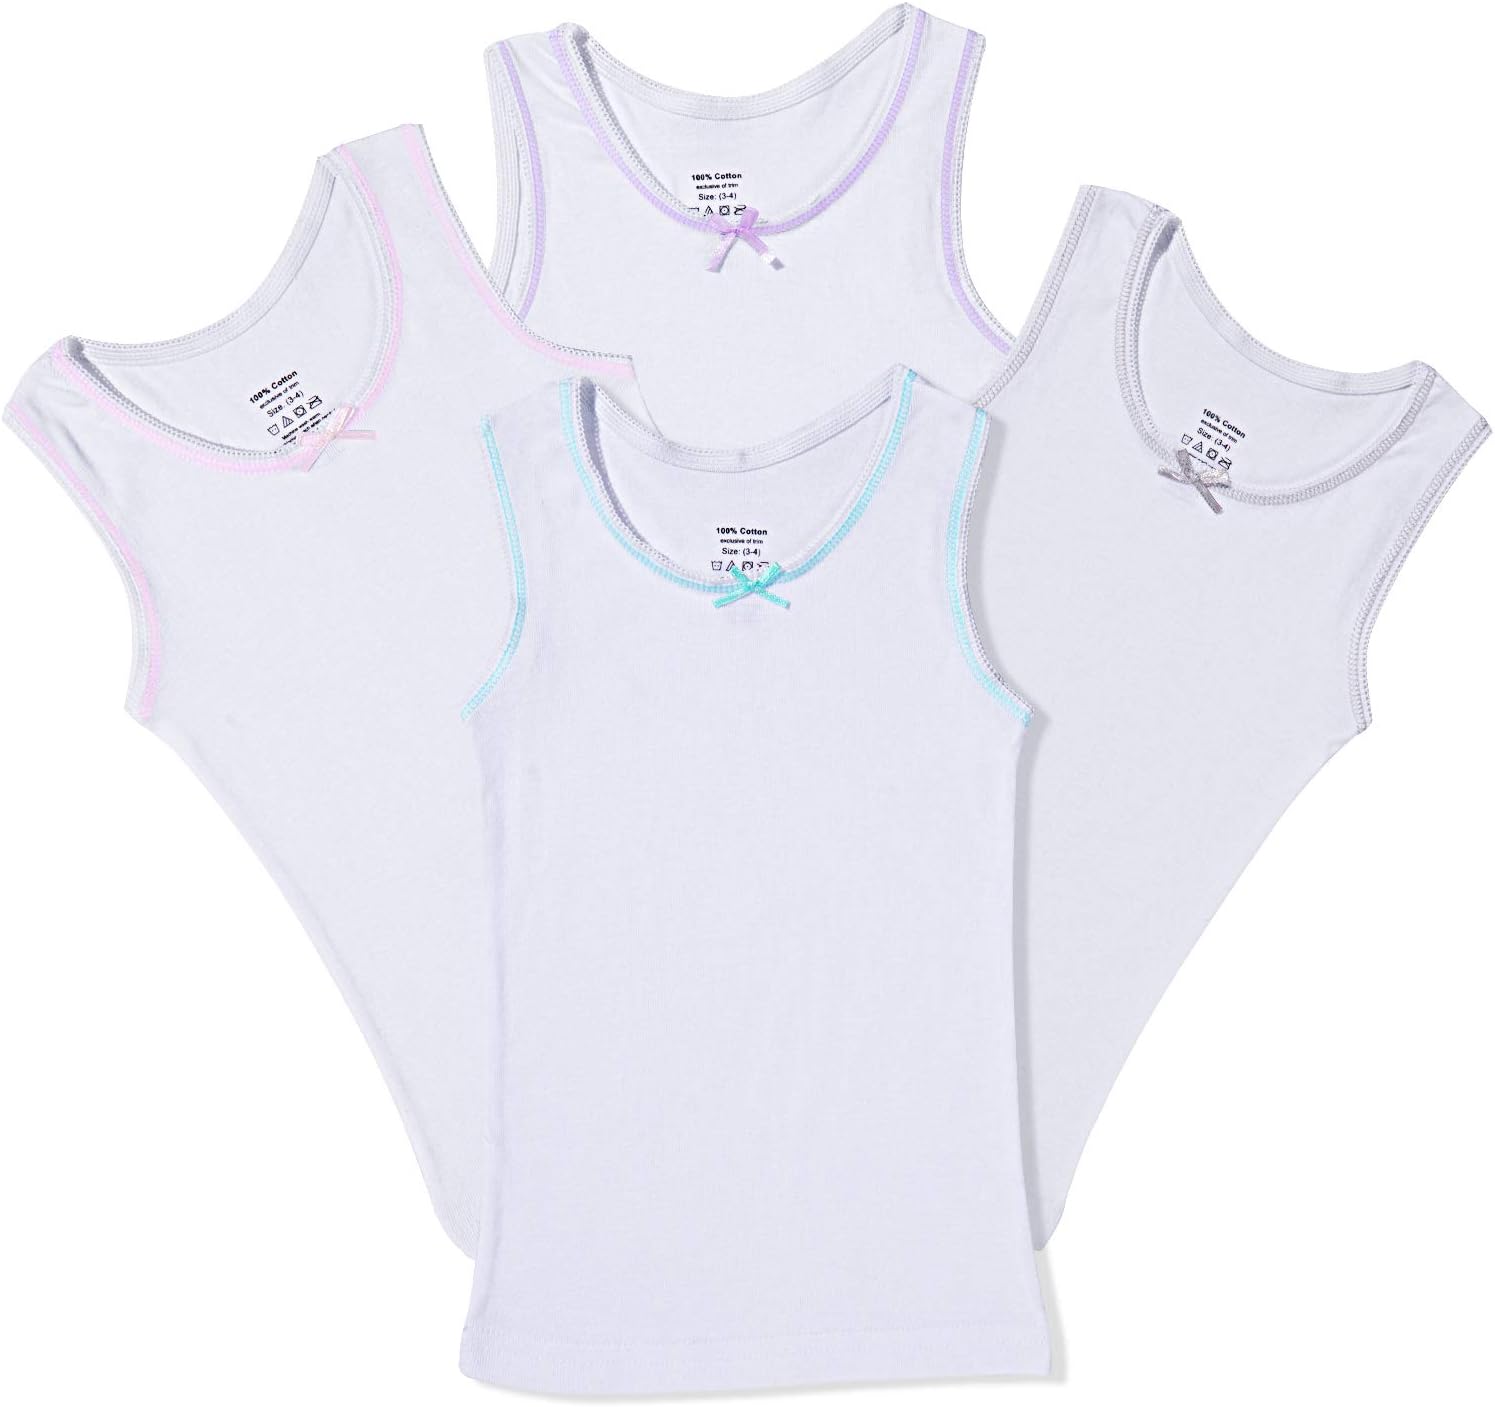 Buyless Fashion Girls Tank Tops - Sleeveless Cami Tanks Cotton Undershirts for Dance Gymnastics, Kids & Toddler Size (4 Pack)